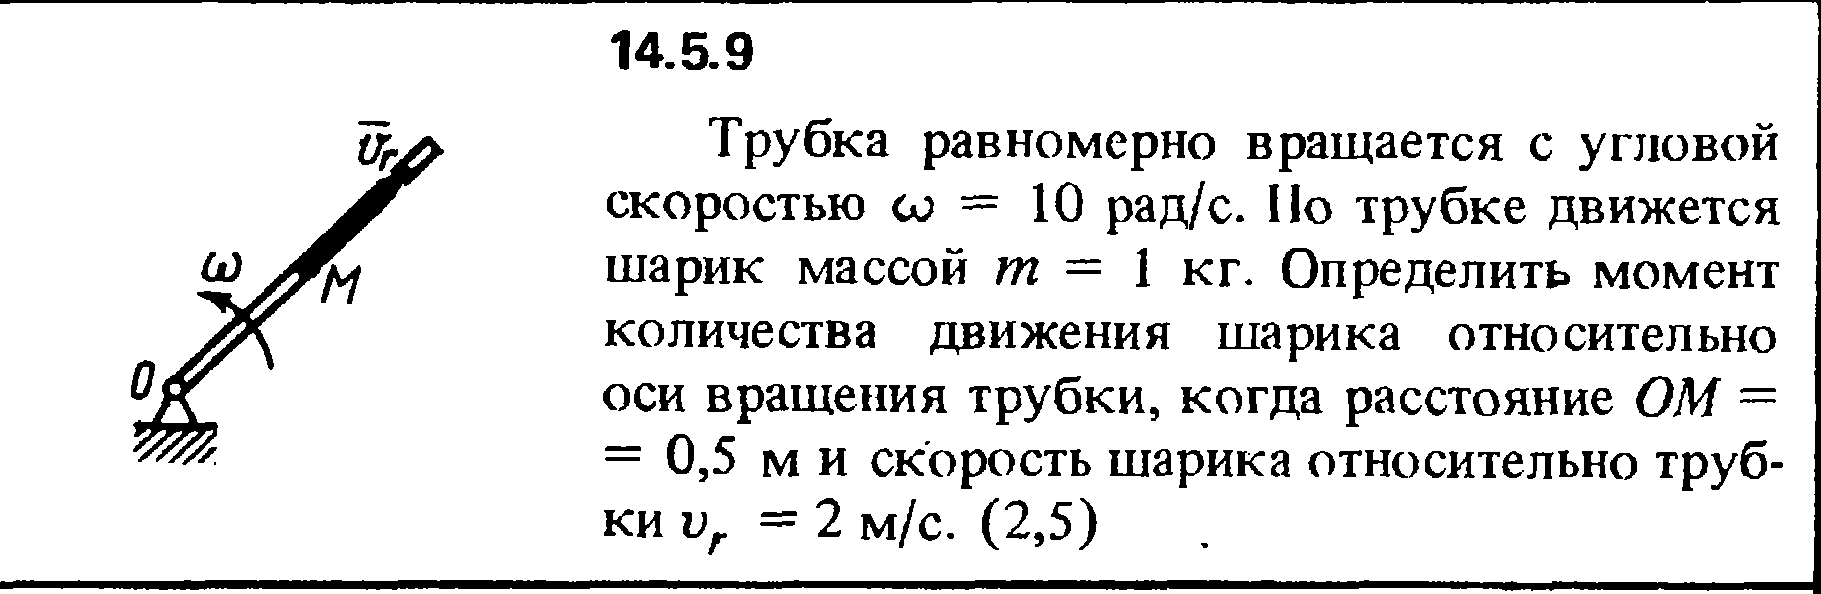 Решение задачи 14.5.9 из сборника Кепе О.Е. 1989 года